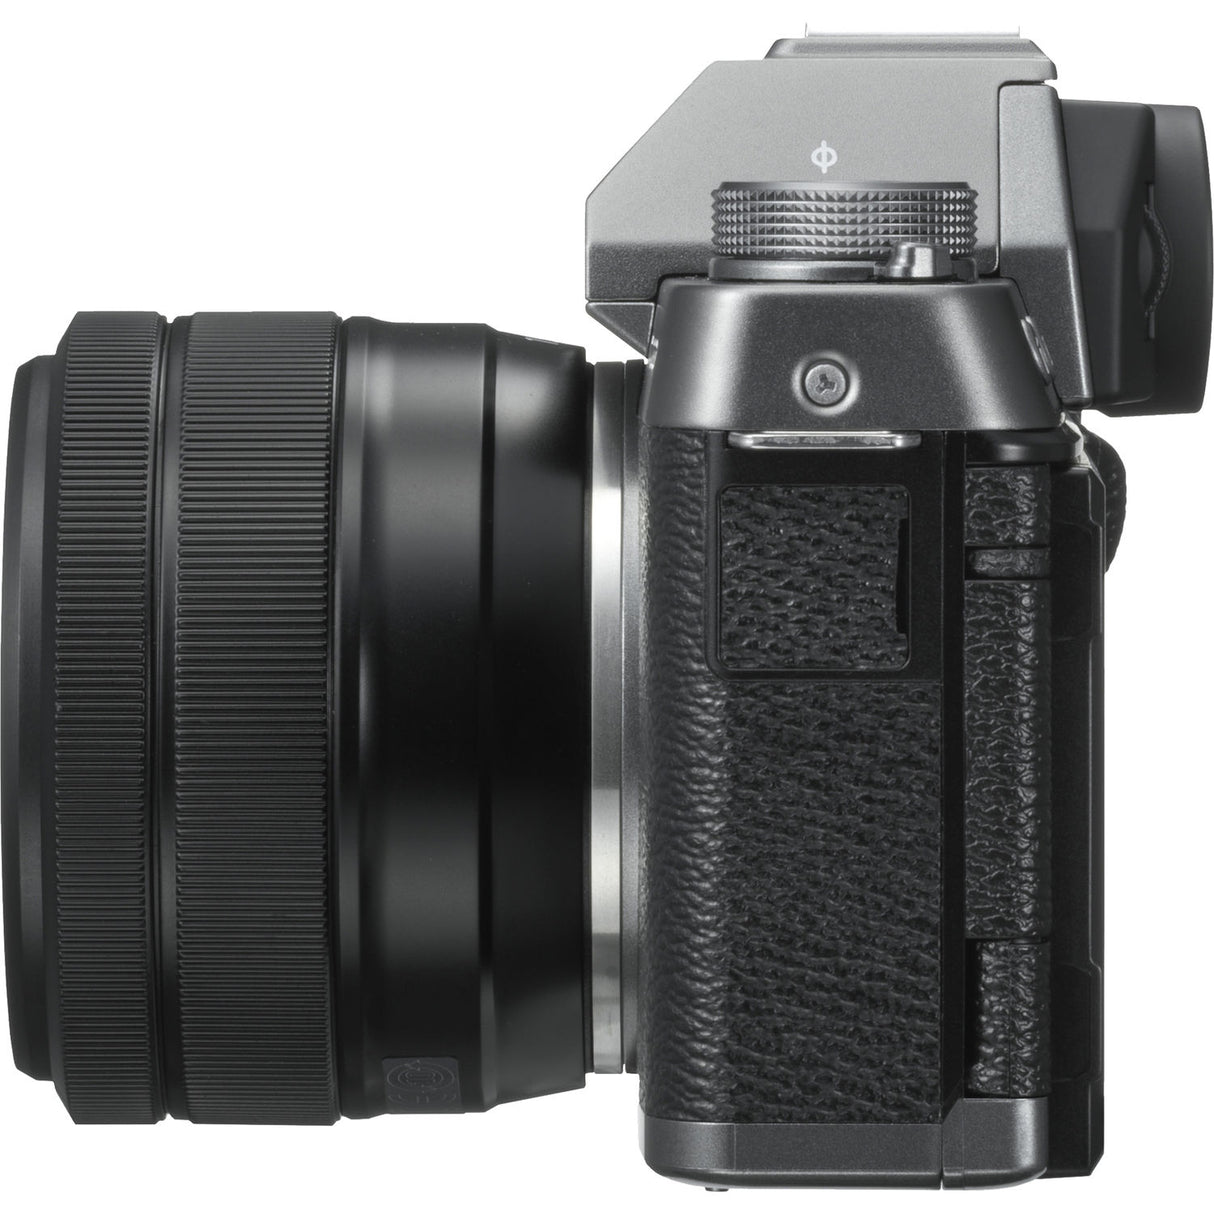 FUJIFILM X-T100 Mirrorless Digital Camera with 15-45mm Lens Dark Silver